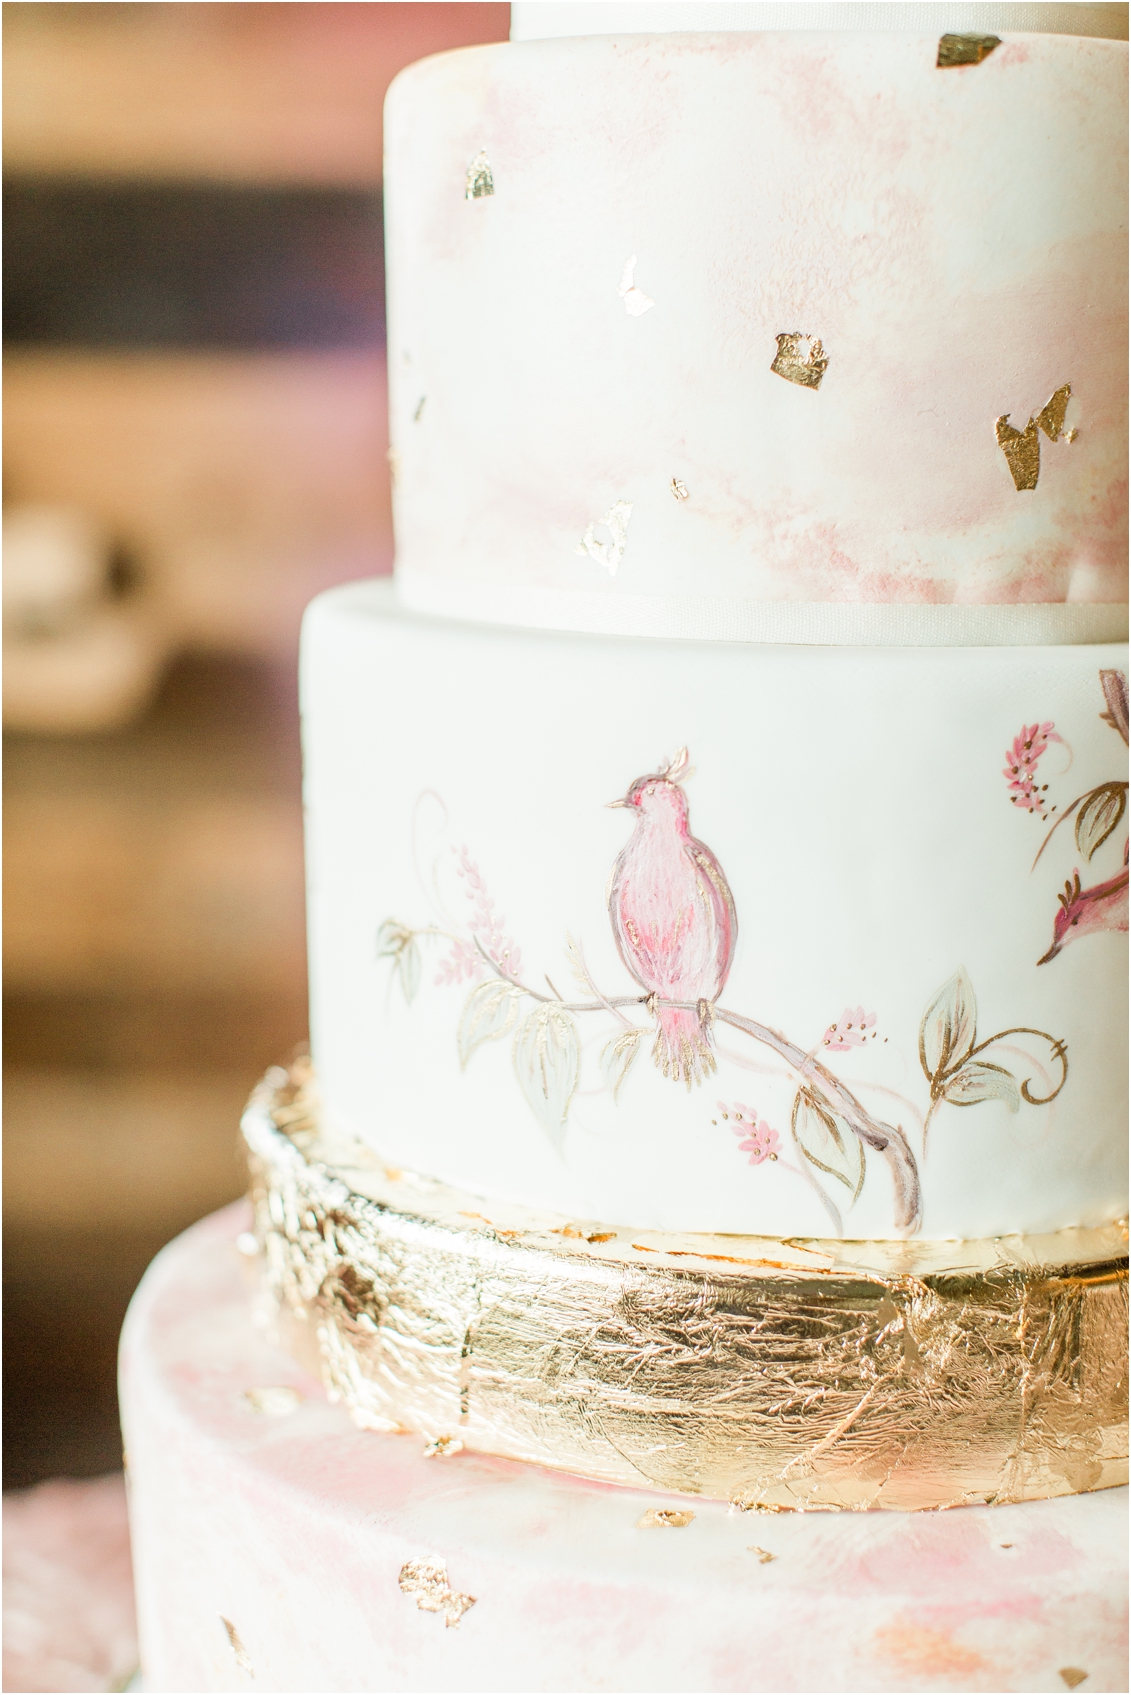 up close shot of wedding cake